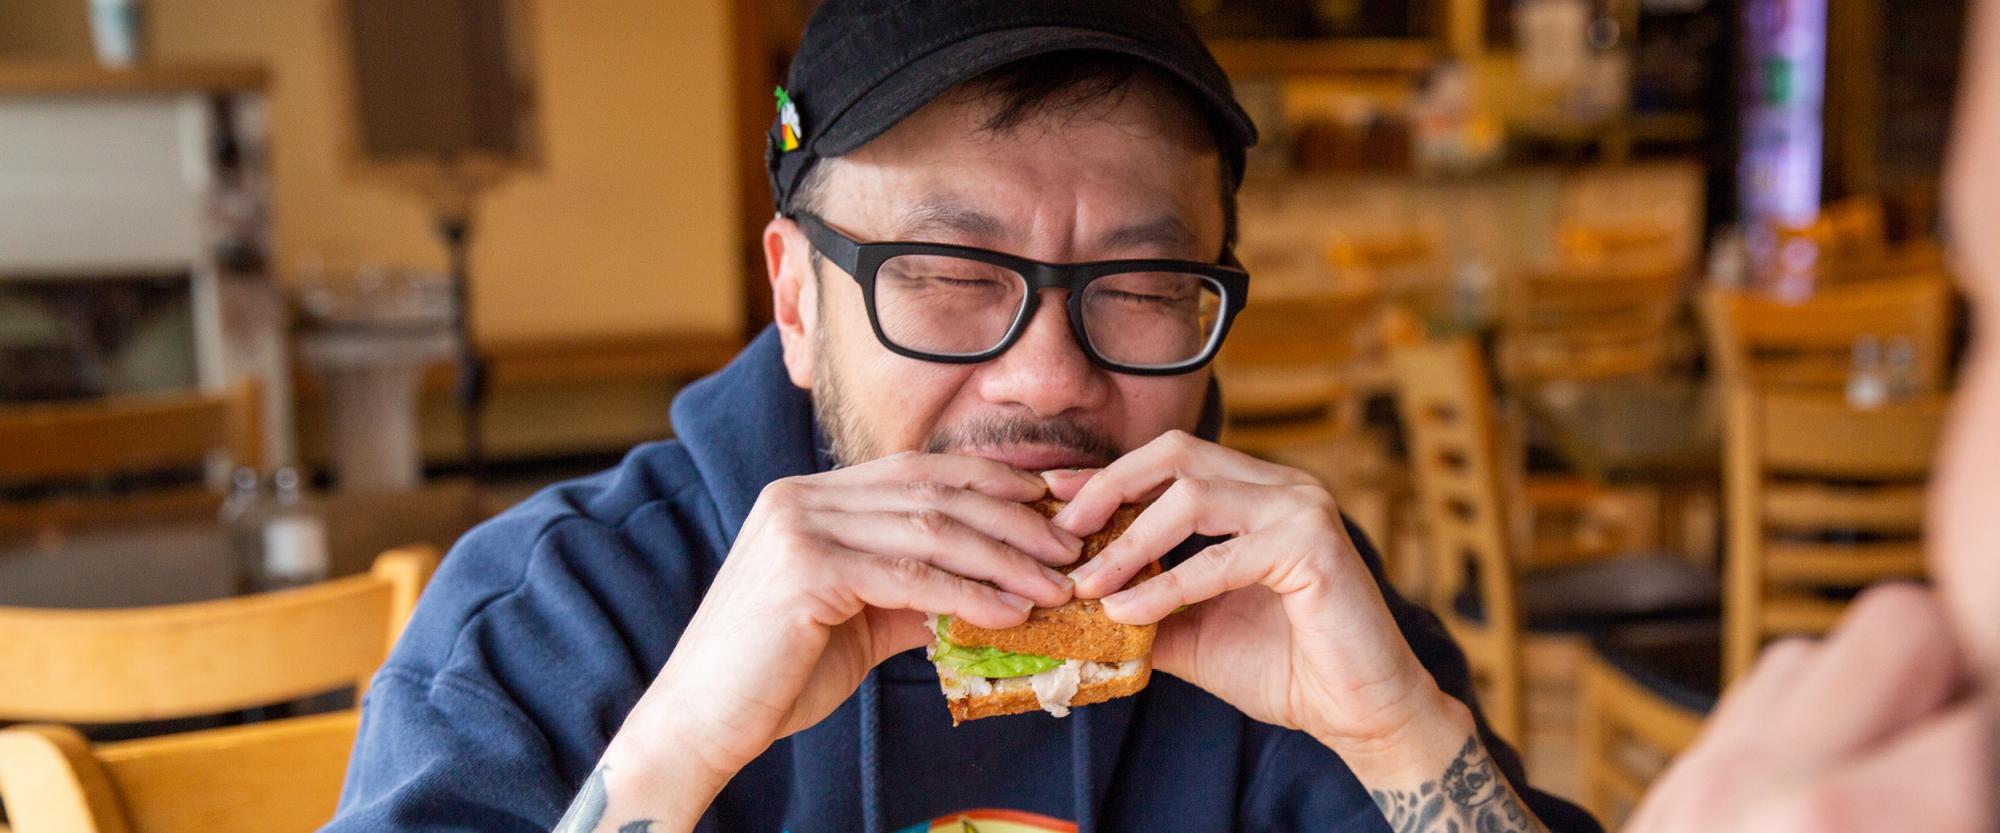 man enjoying a sandwich at tanya's soup kitchen in wichita, kansas